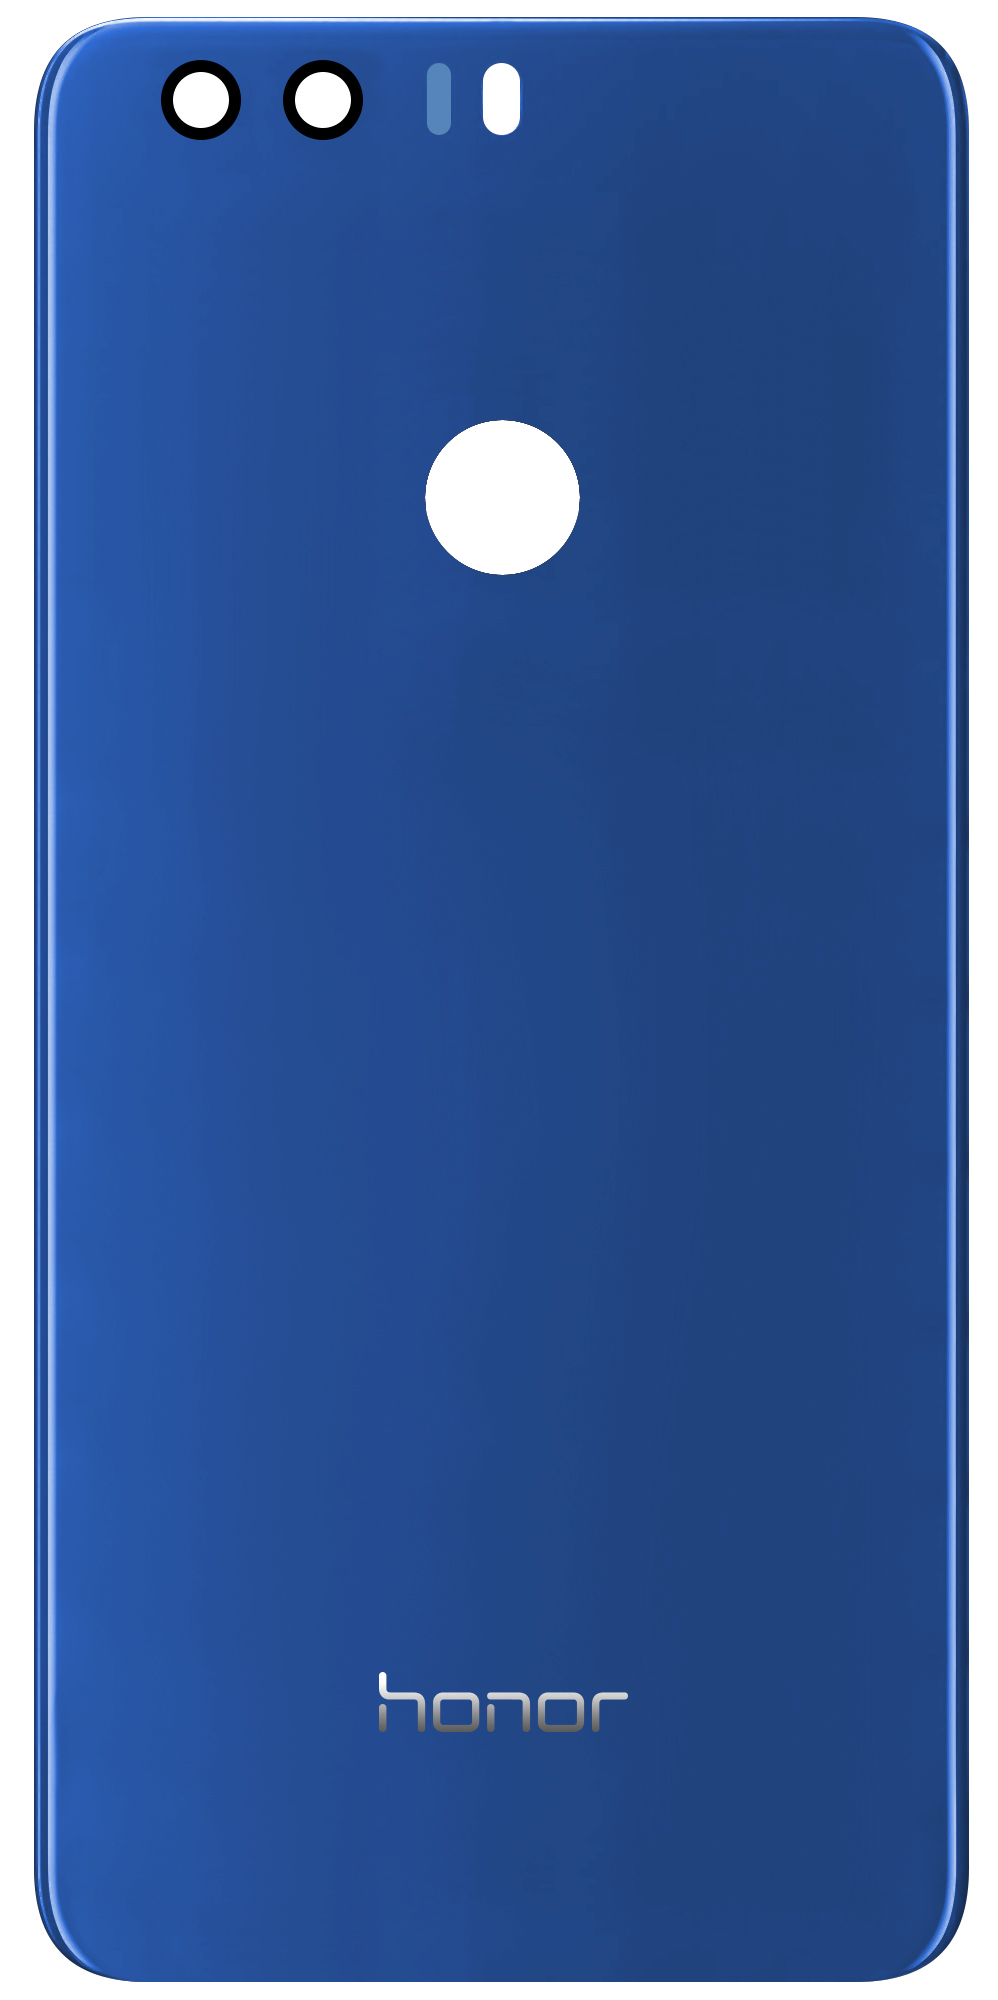 capac-baterie-honor-8-2C-albastru